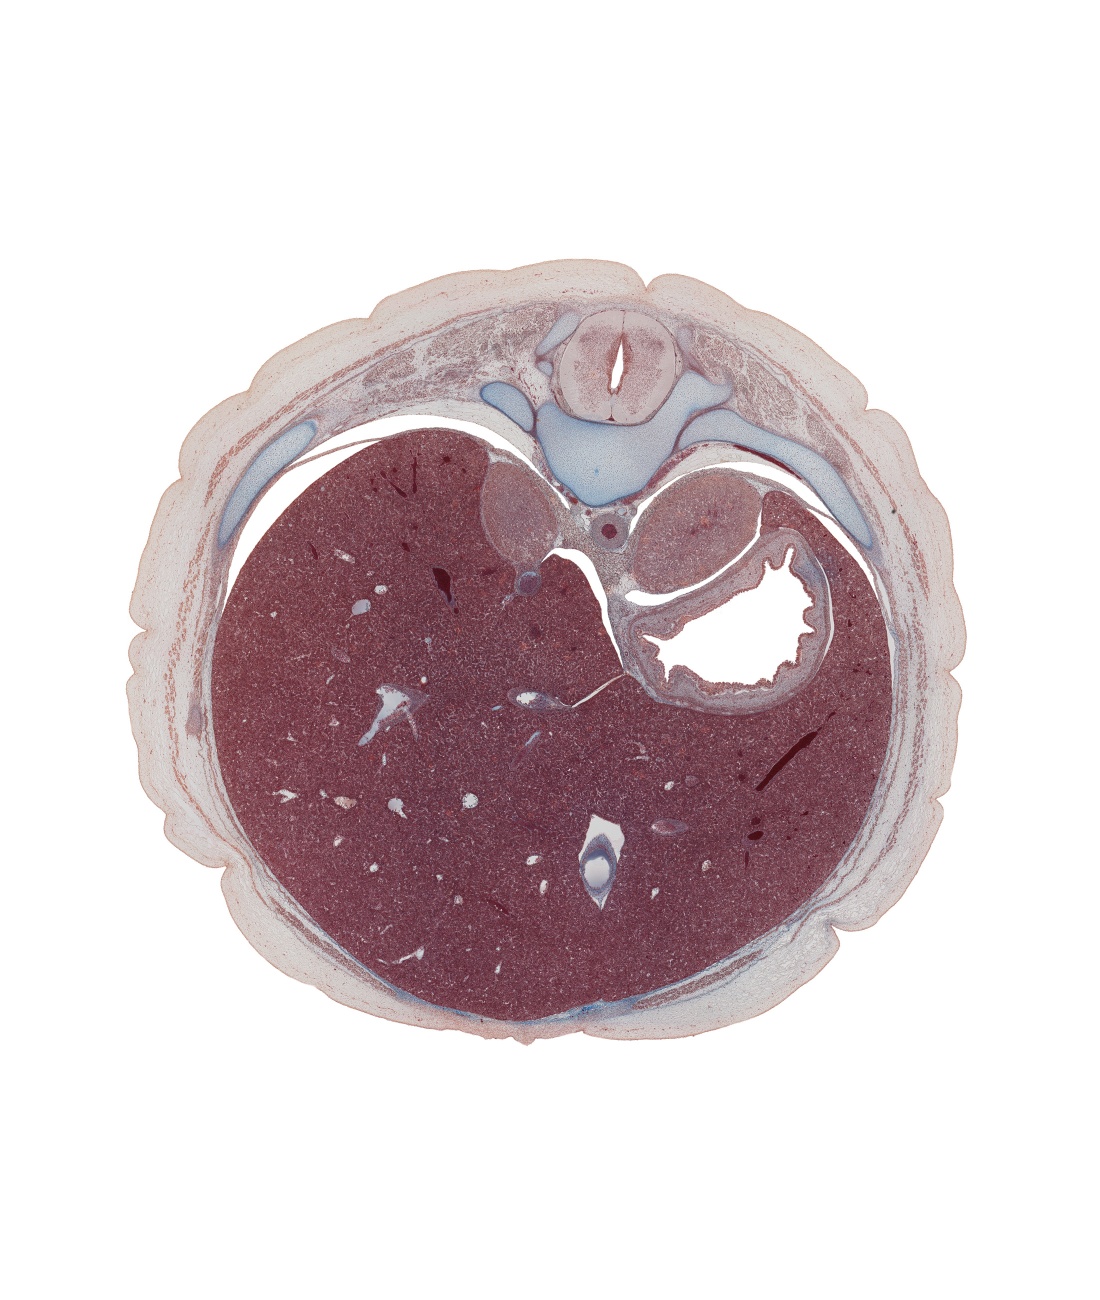 T-10 / T-11 interganglion region, anterior rectus sheath, aorta, diaphragm, dorsal mesogastrium, ductus venosus, greater sac, inferior vena cava, left lobe of liver, lumen of body of stomach, pleural recess, rectus abdominis muscle, rib 11, right crus of diaphragm, right lobe of liver, suprarenal gland, sympathetic trunk